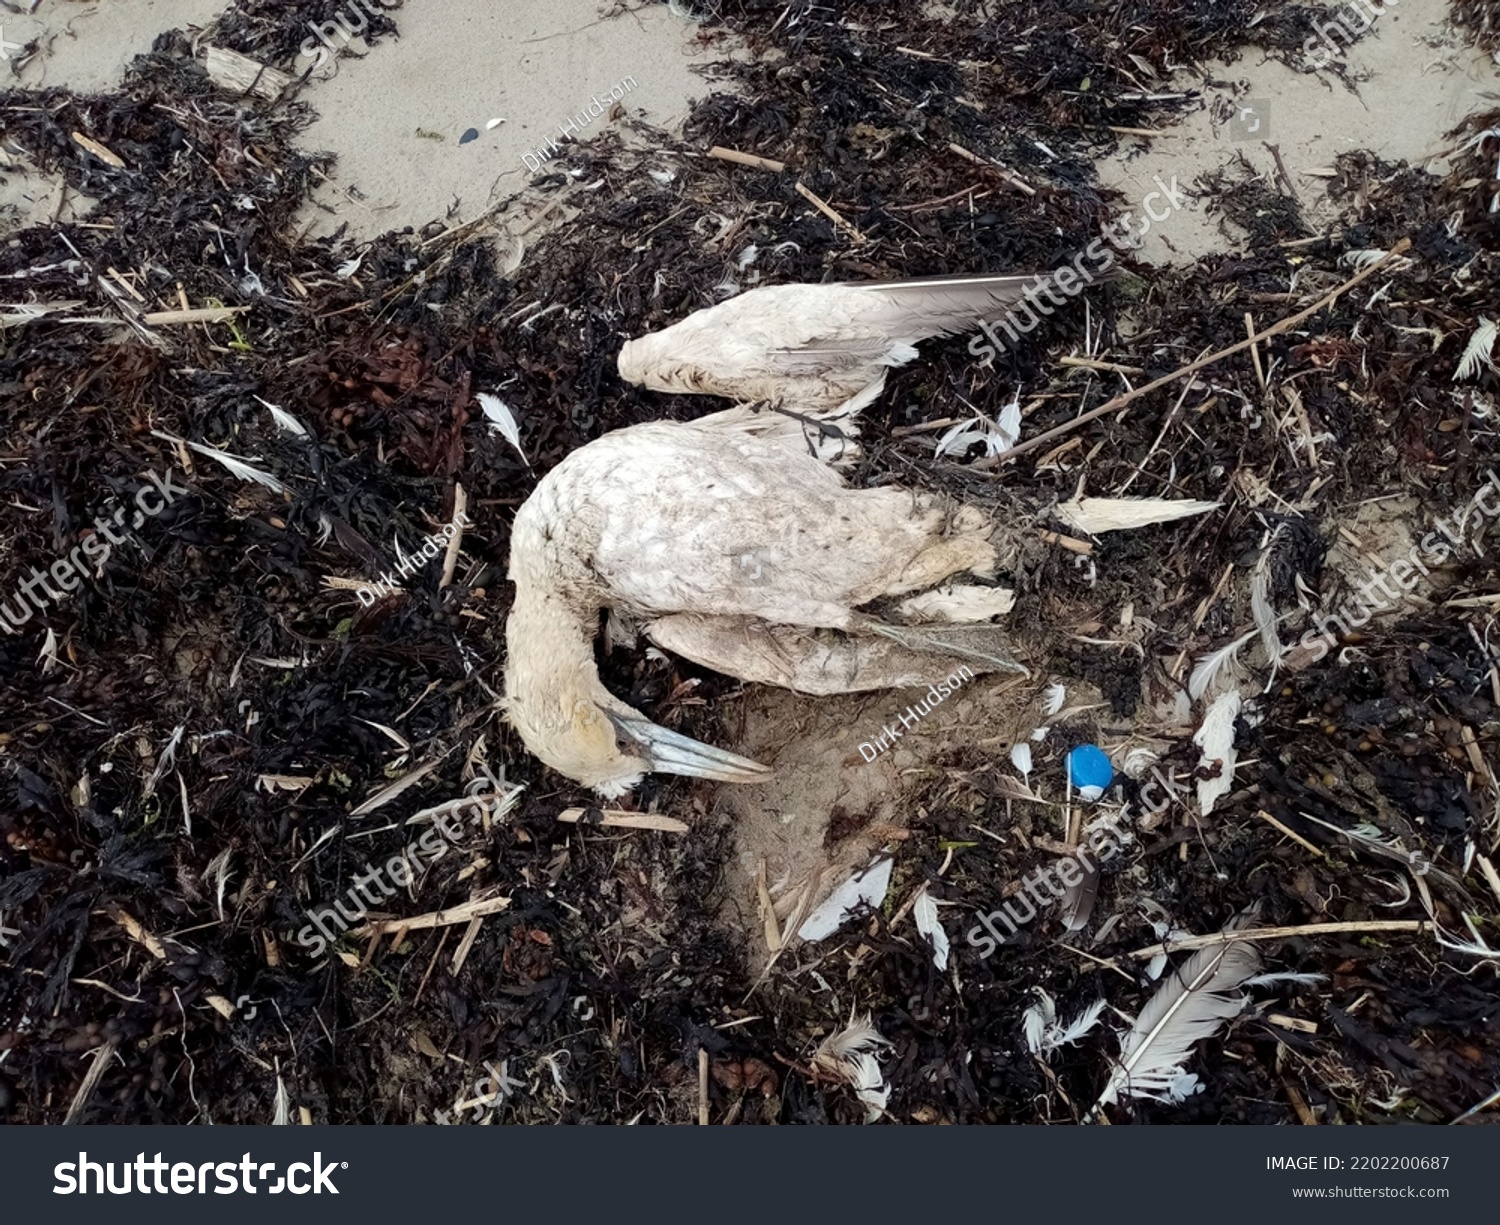 Dead gannet seabird on Seapoint Beach, Termonfeckin, County Louth, Ireland, one of many dead birds on the beach killed from Avian bird flu.  #2202200687